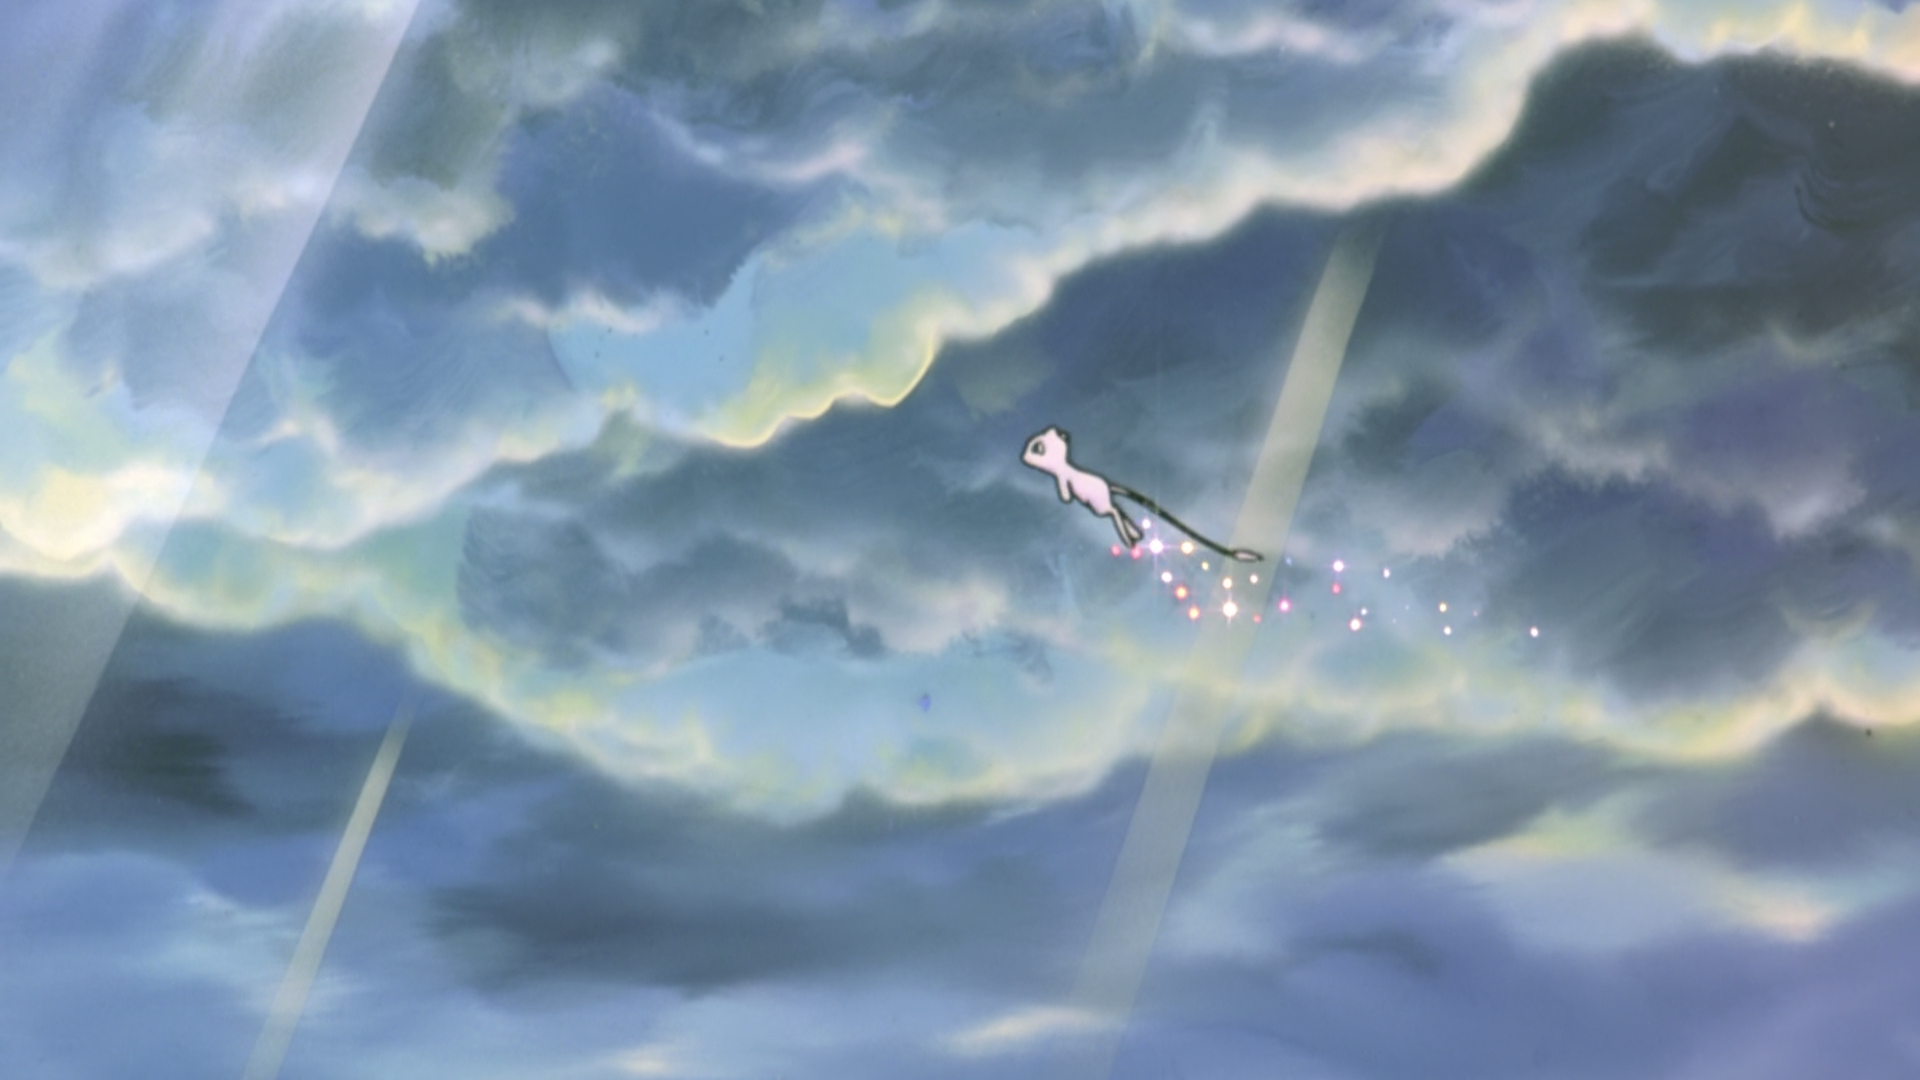 Mew pokemon flying in the sky